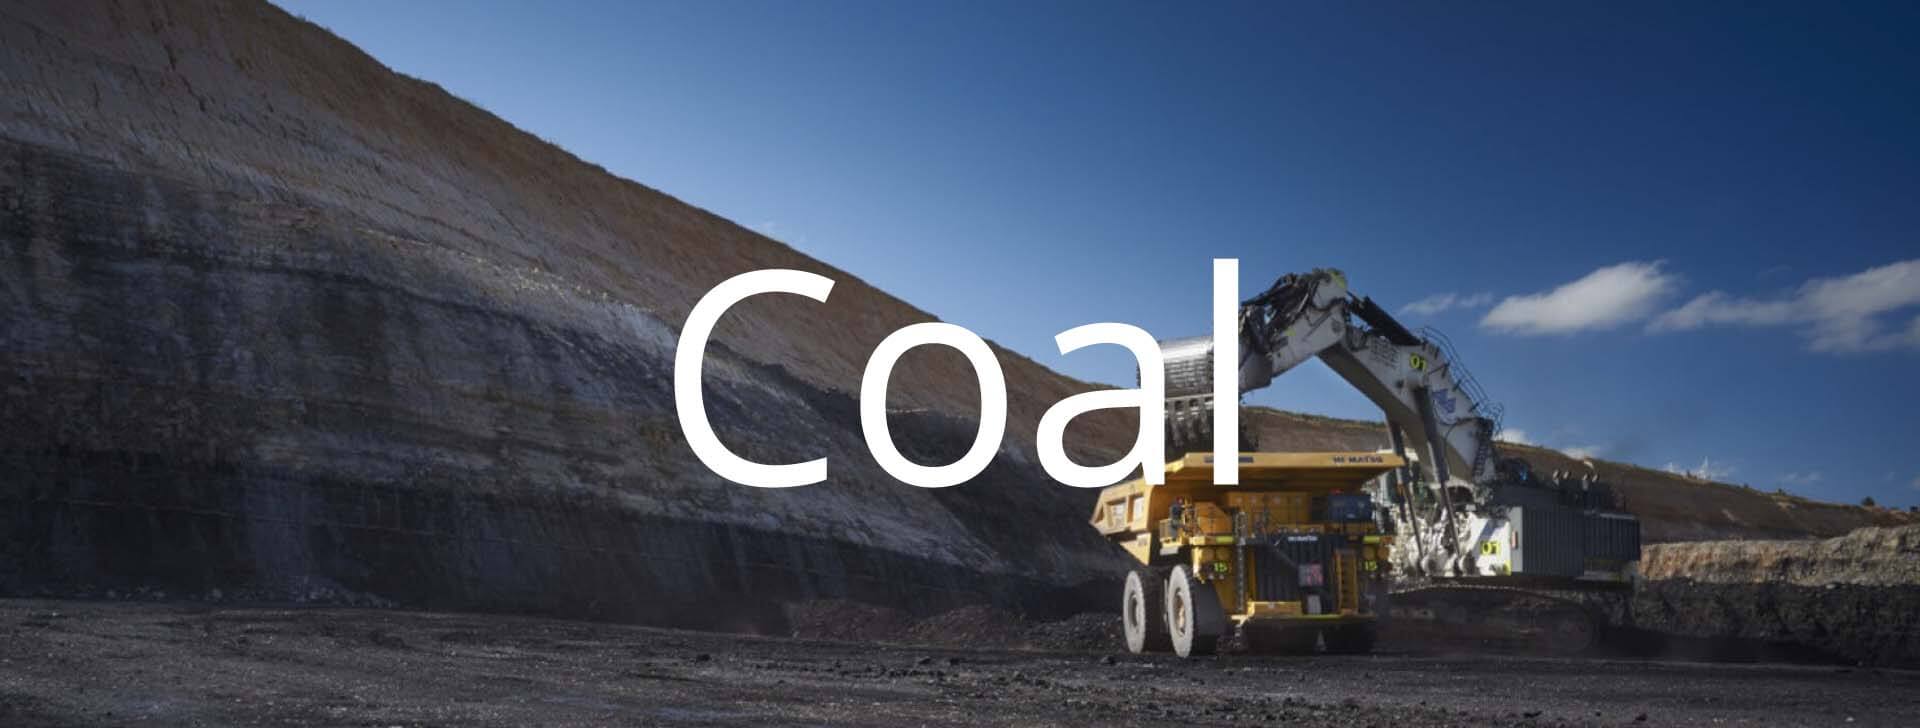 Coal Featured Image2